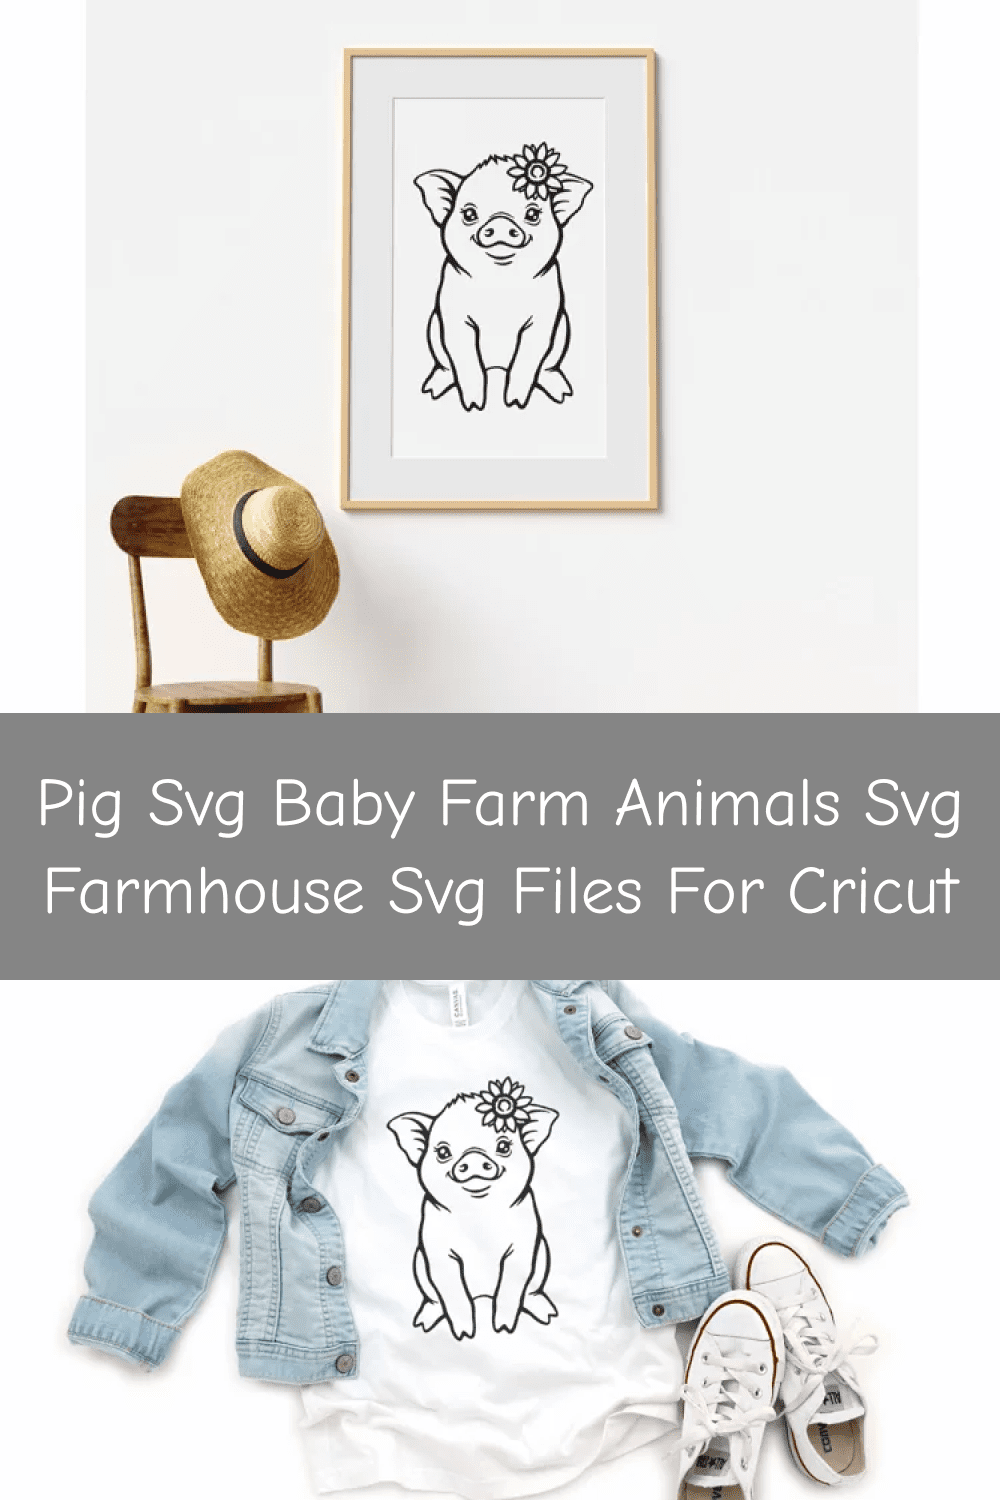 Pig SVG Baby Farm Animals SVG Farmhouse SVG Files for Cricut.